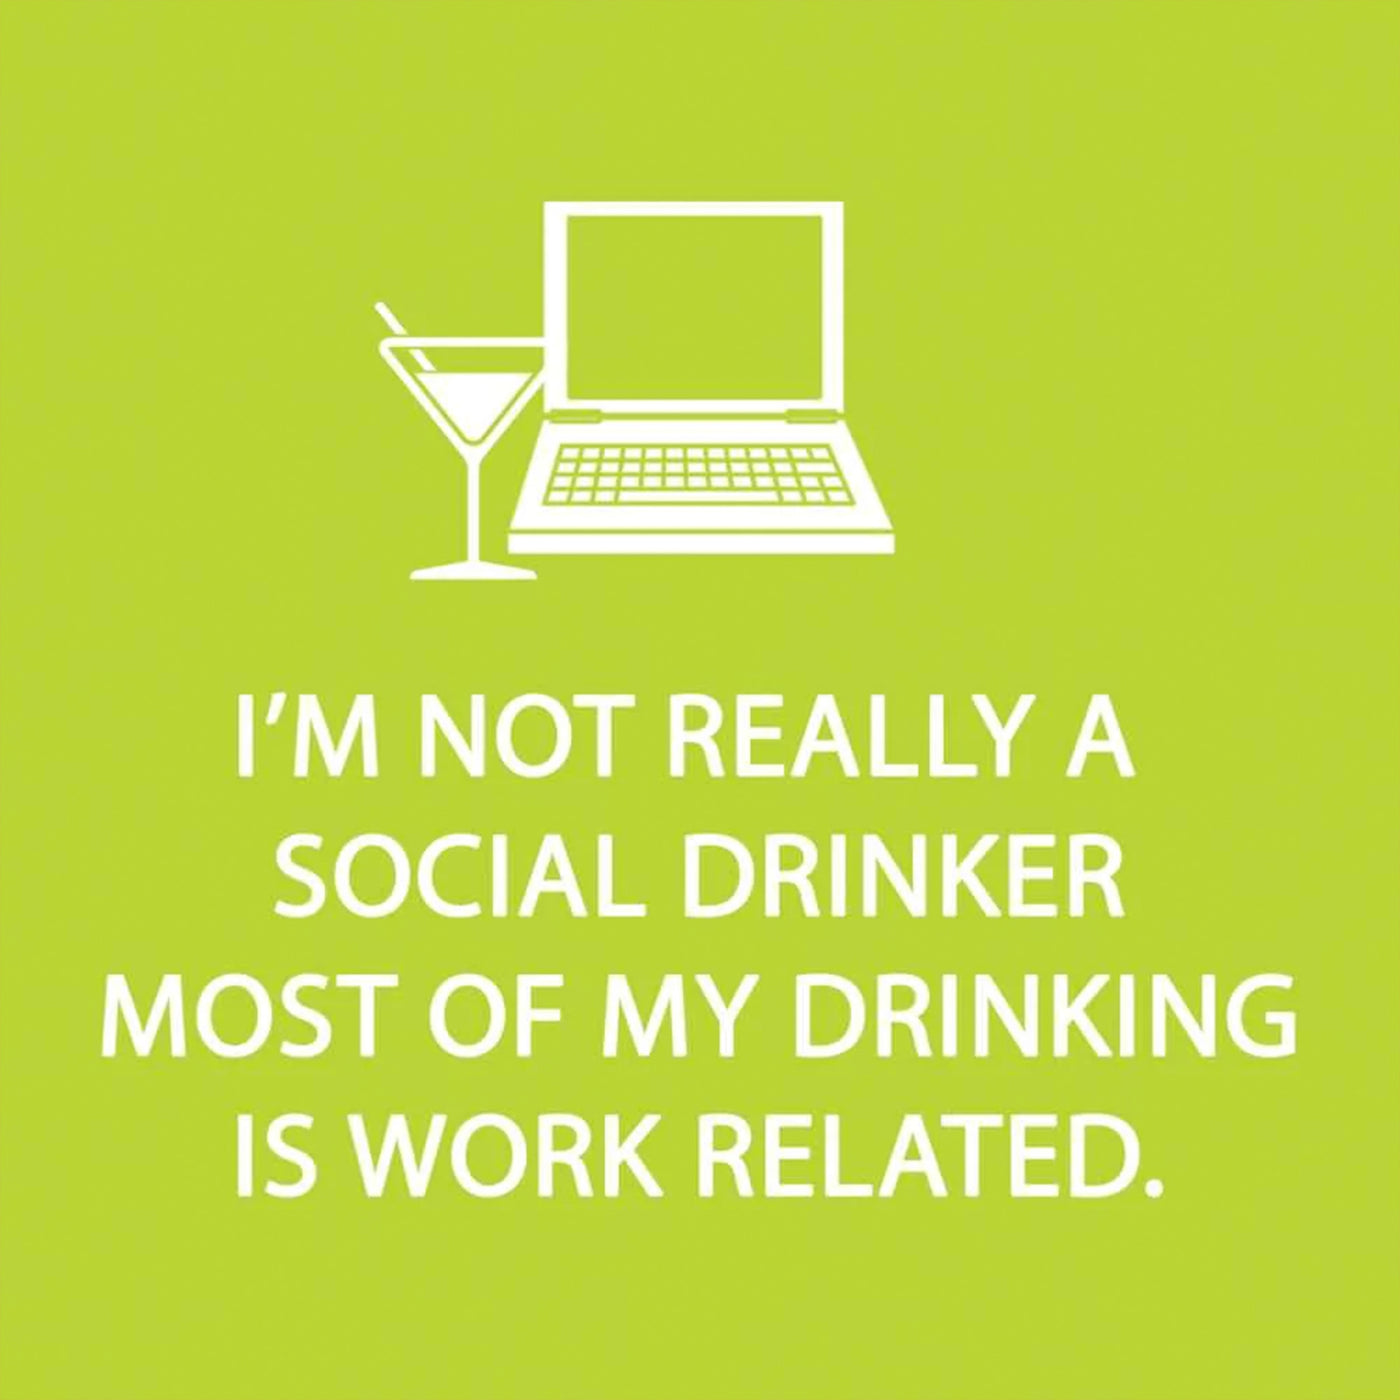 I'm Not Really a Social Drinker